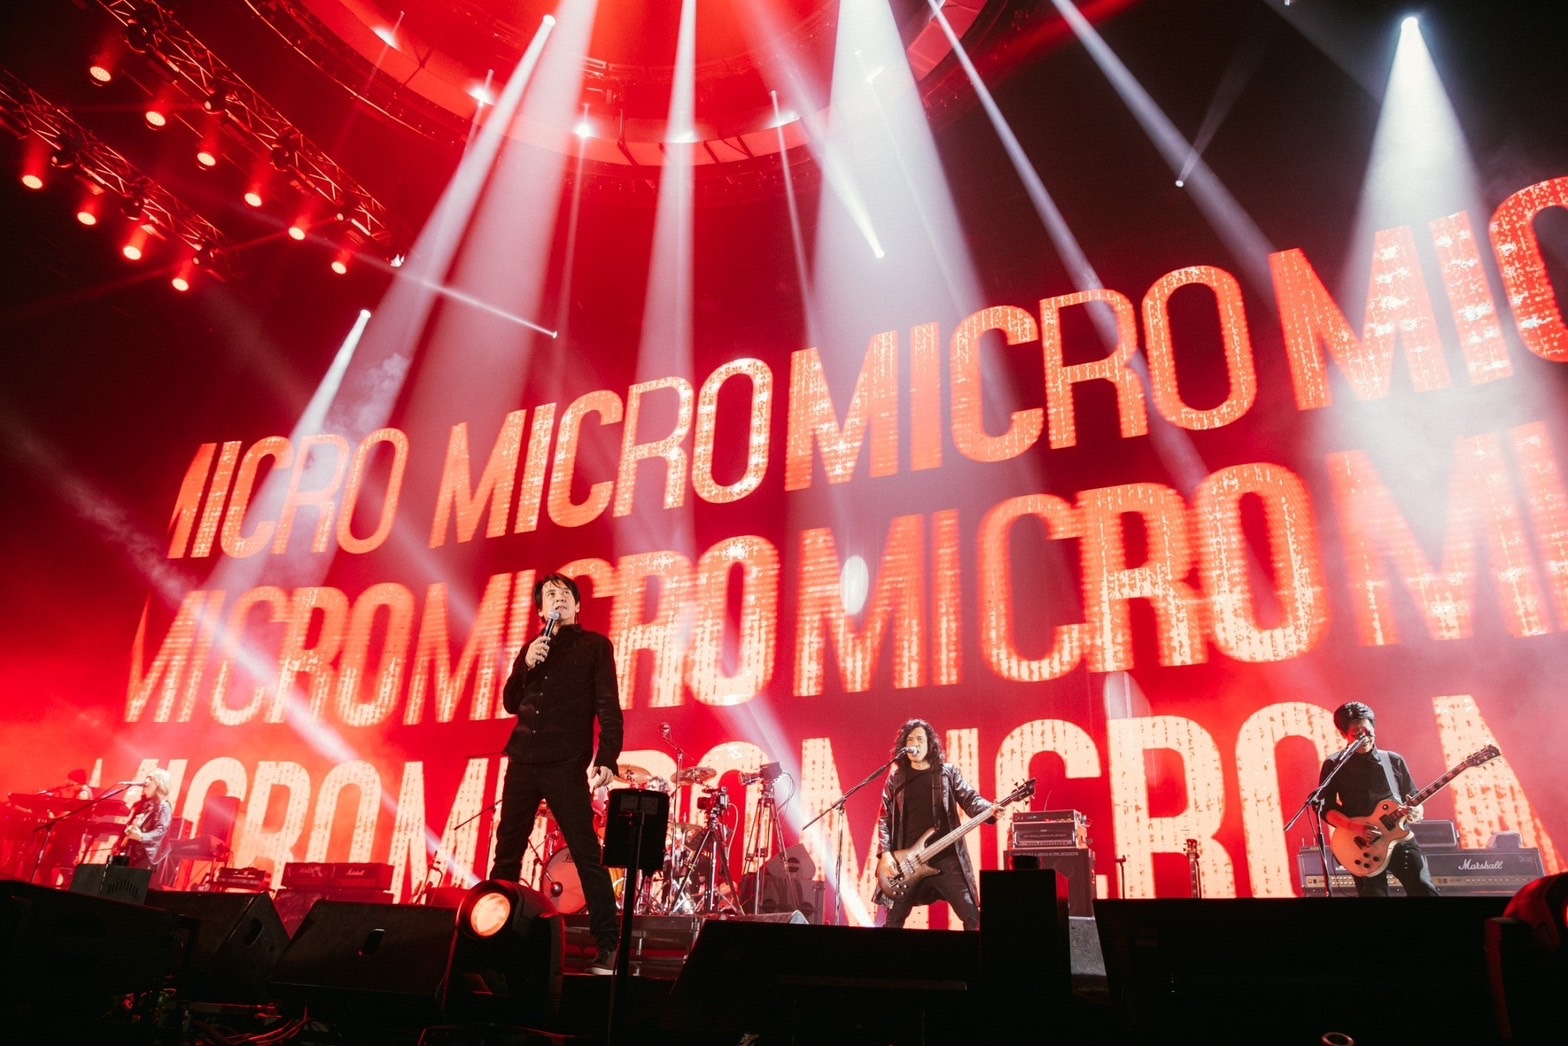 Chang Music Connection presents MICRO THE LAST ร็อค เล็ก เล็ก